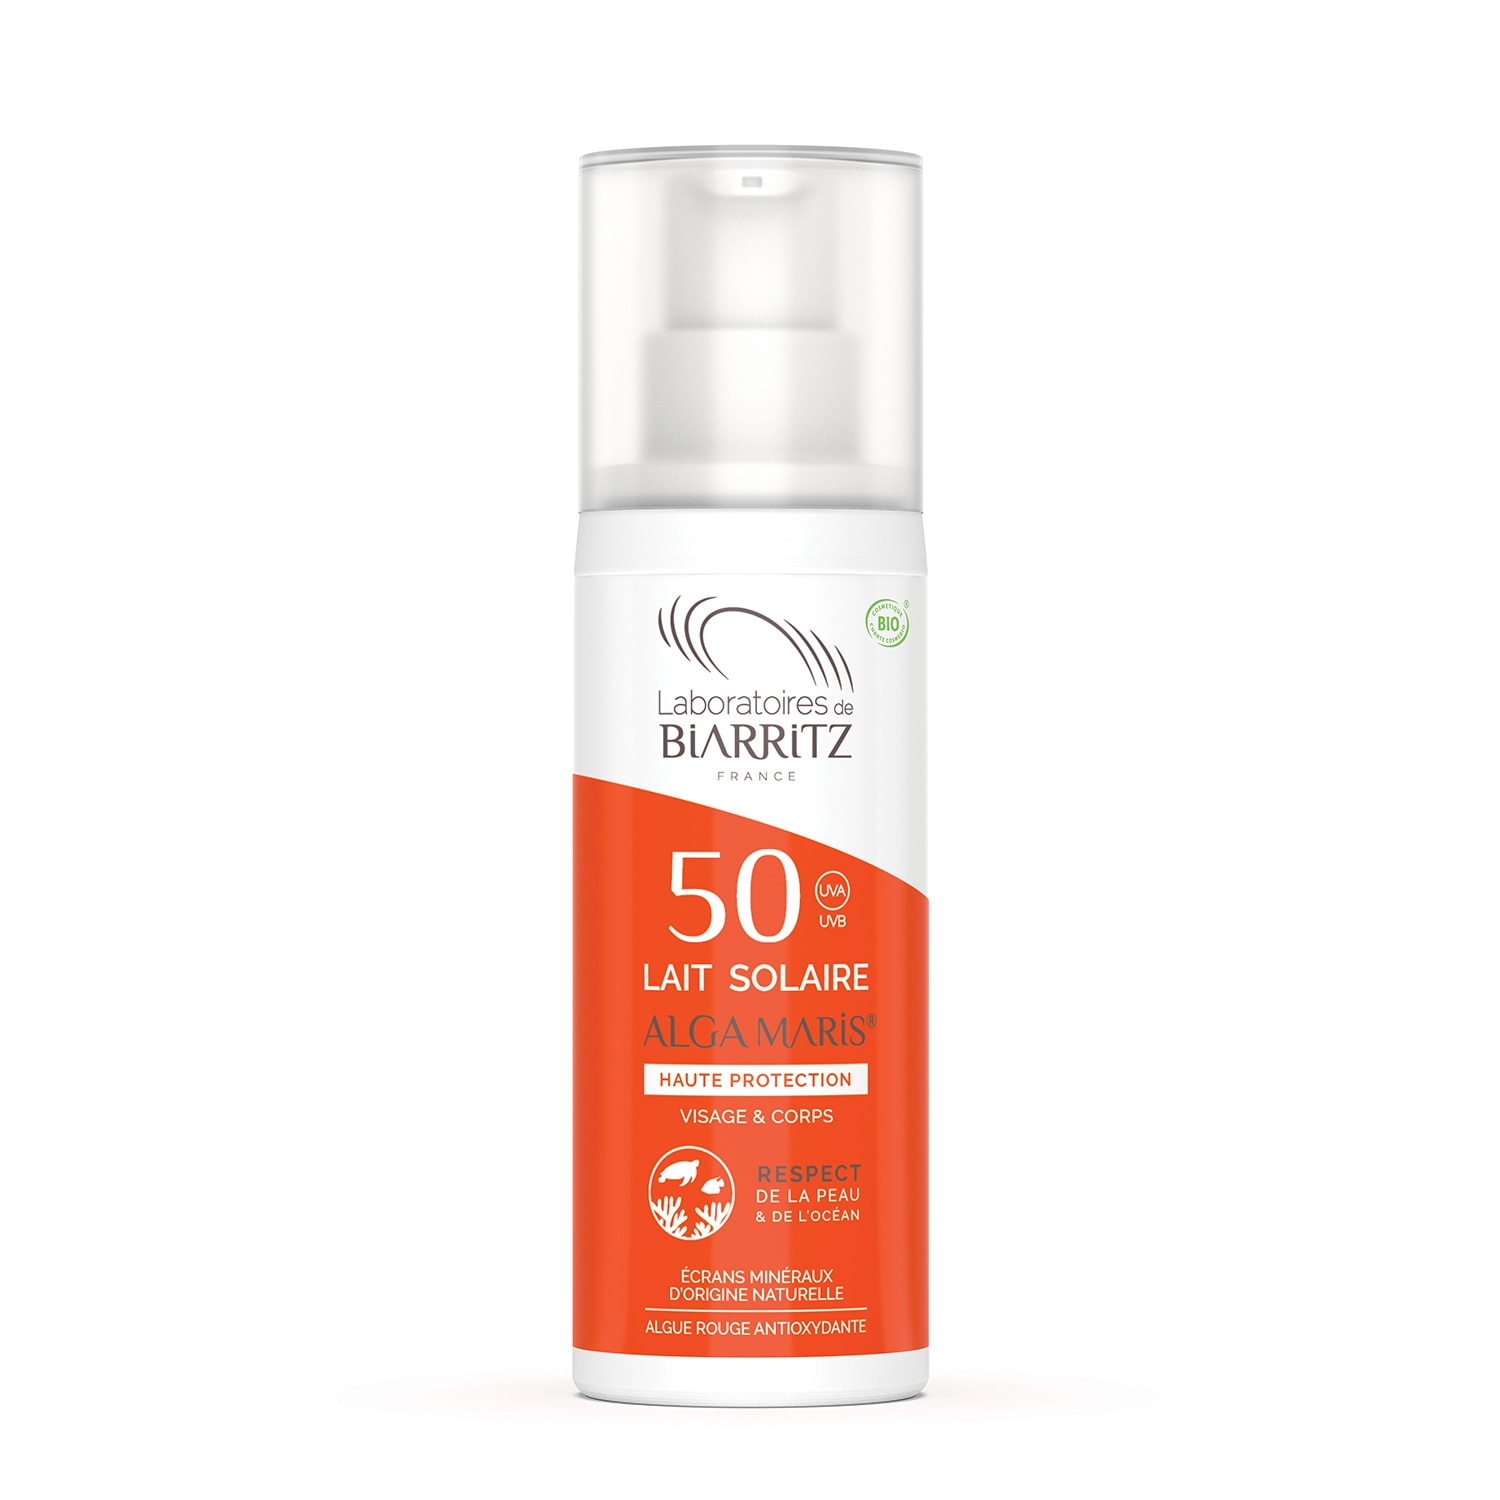 Sunscreen Lotion SPF50